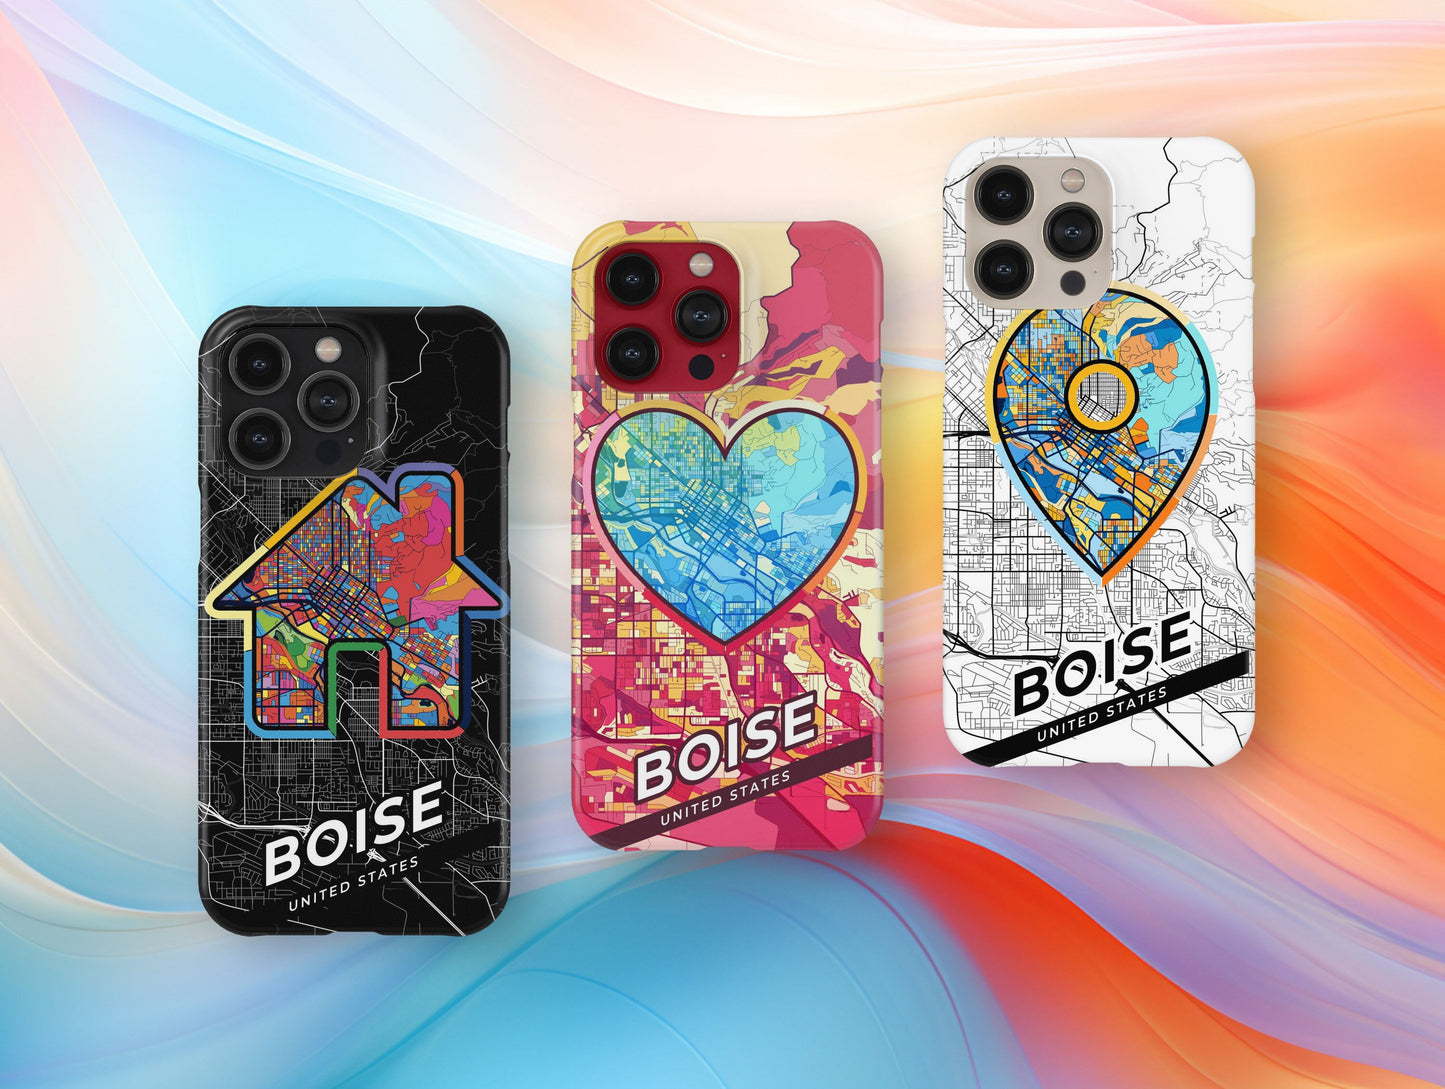 Boise Idaho slim phone case with colorful icon. Birthday, wedding or housewarming gift. Couple match cases.